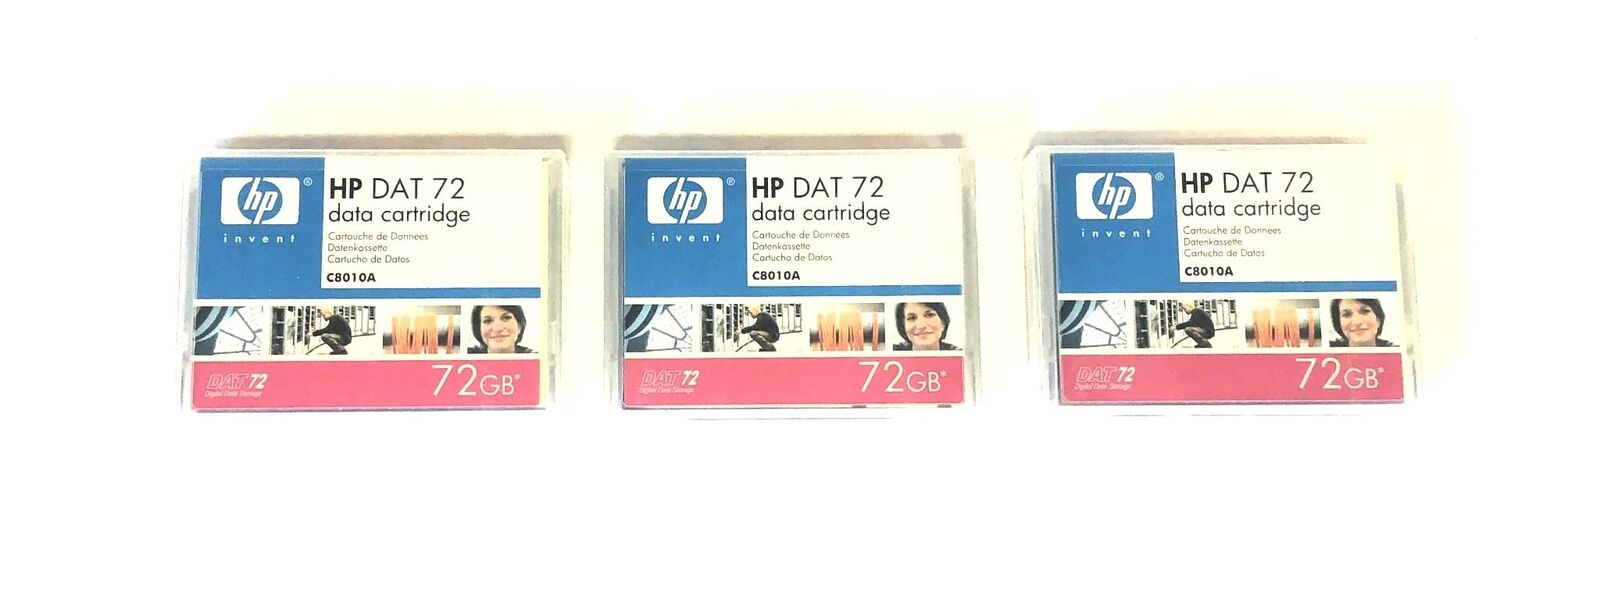 HP 72GB Data Cartridge C8010A [Lot of 3] NOS